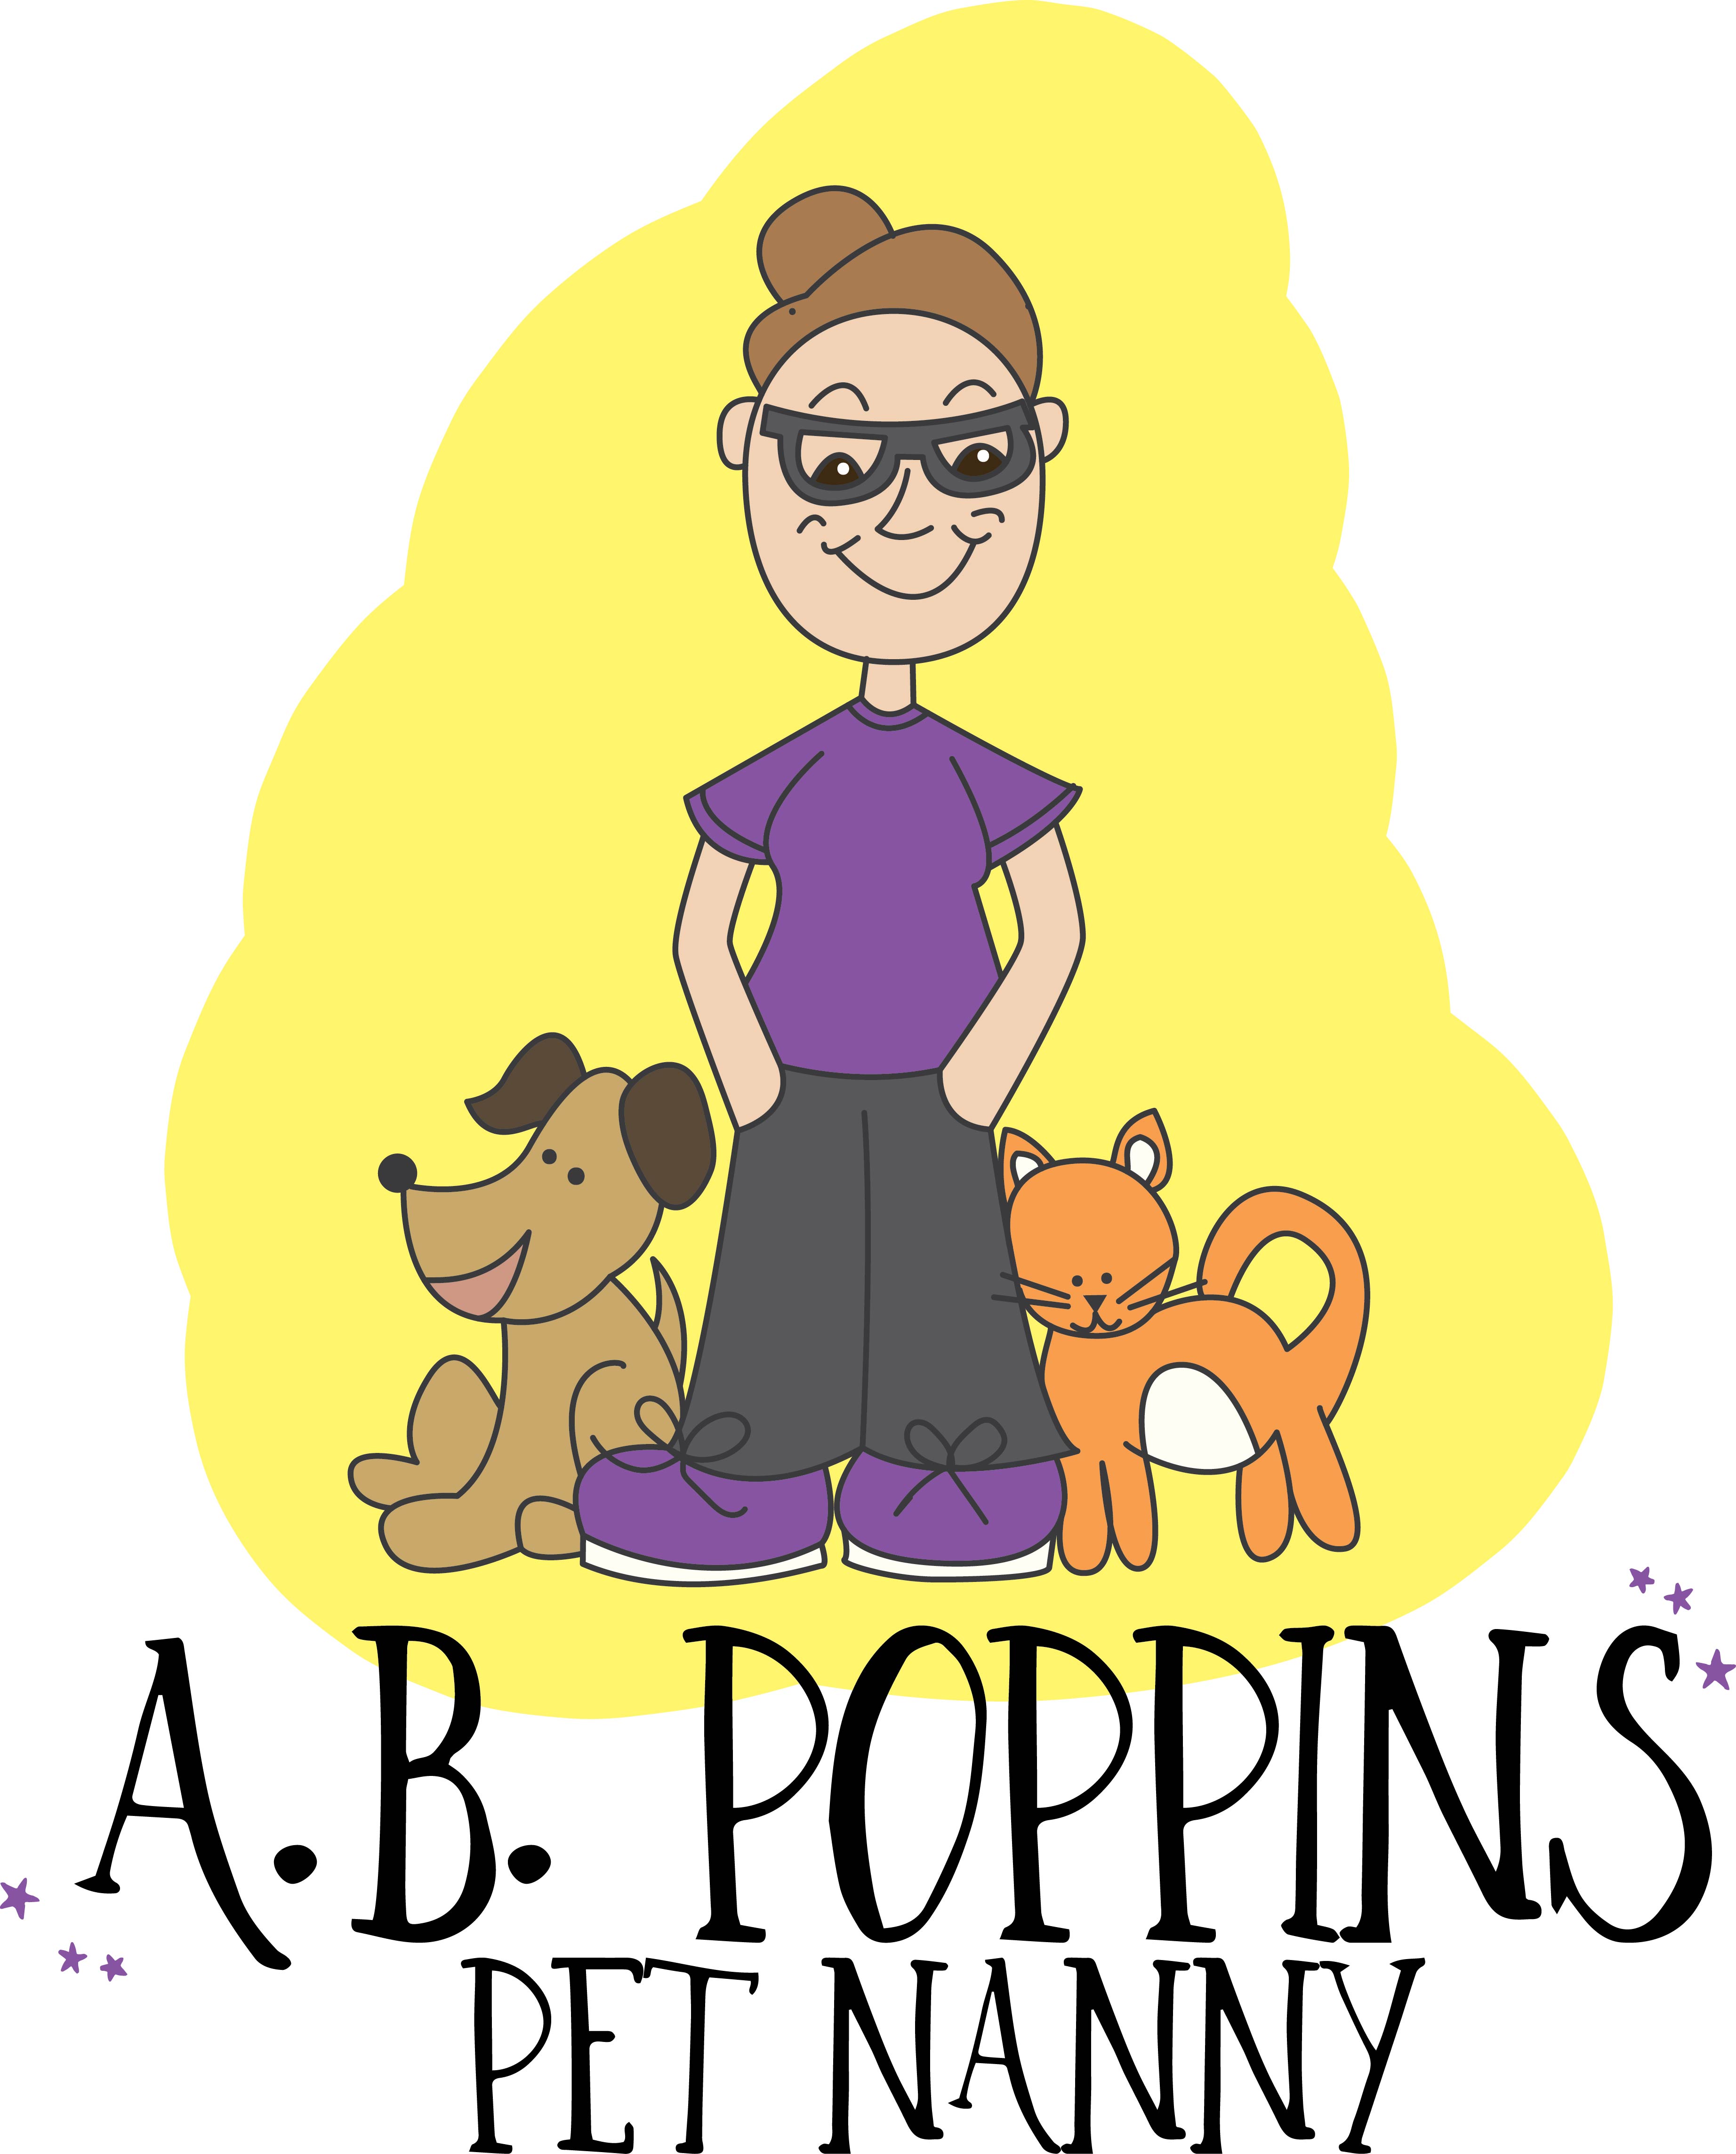 A.B. Poppins Pet Nanny